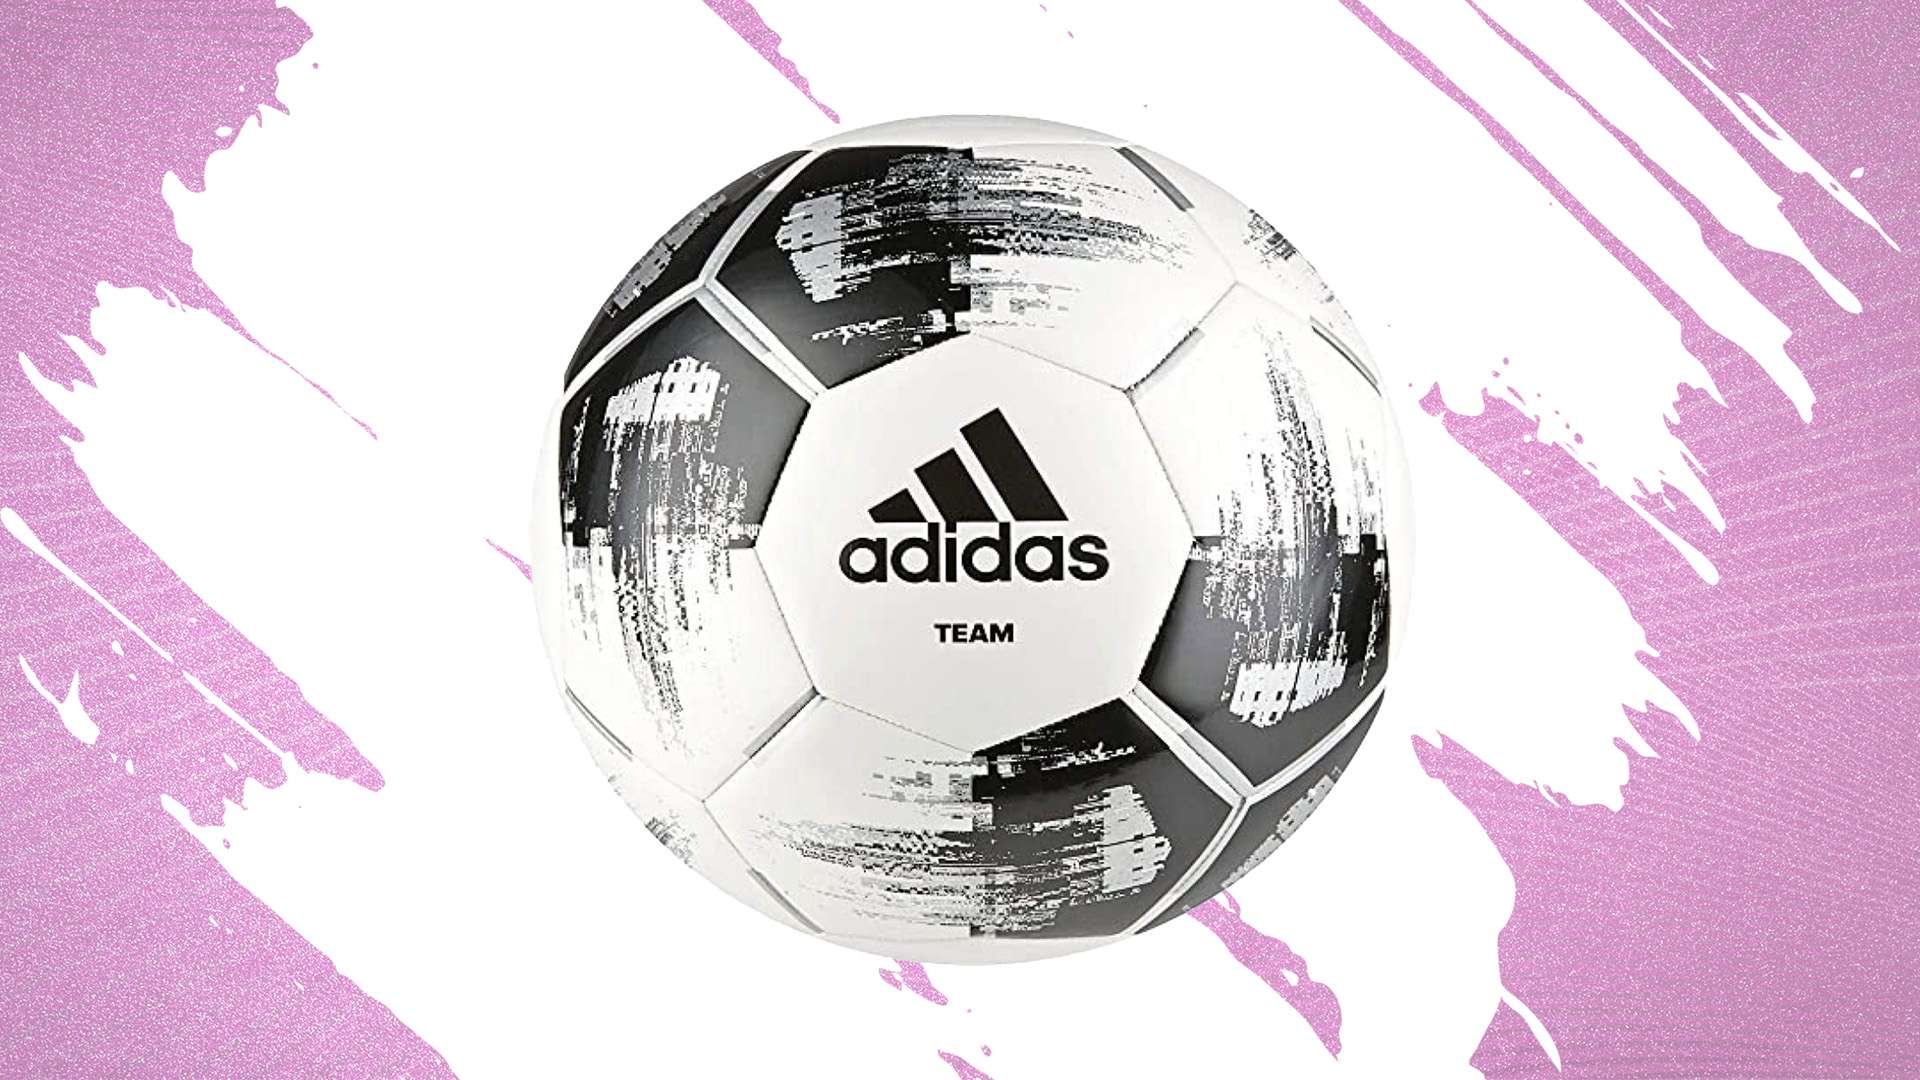 Adidas Team ball